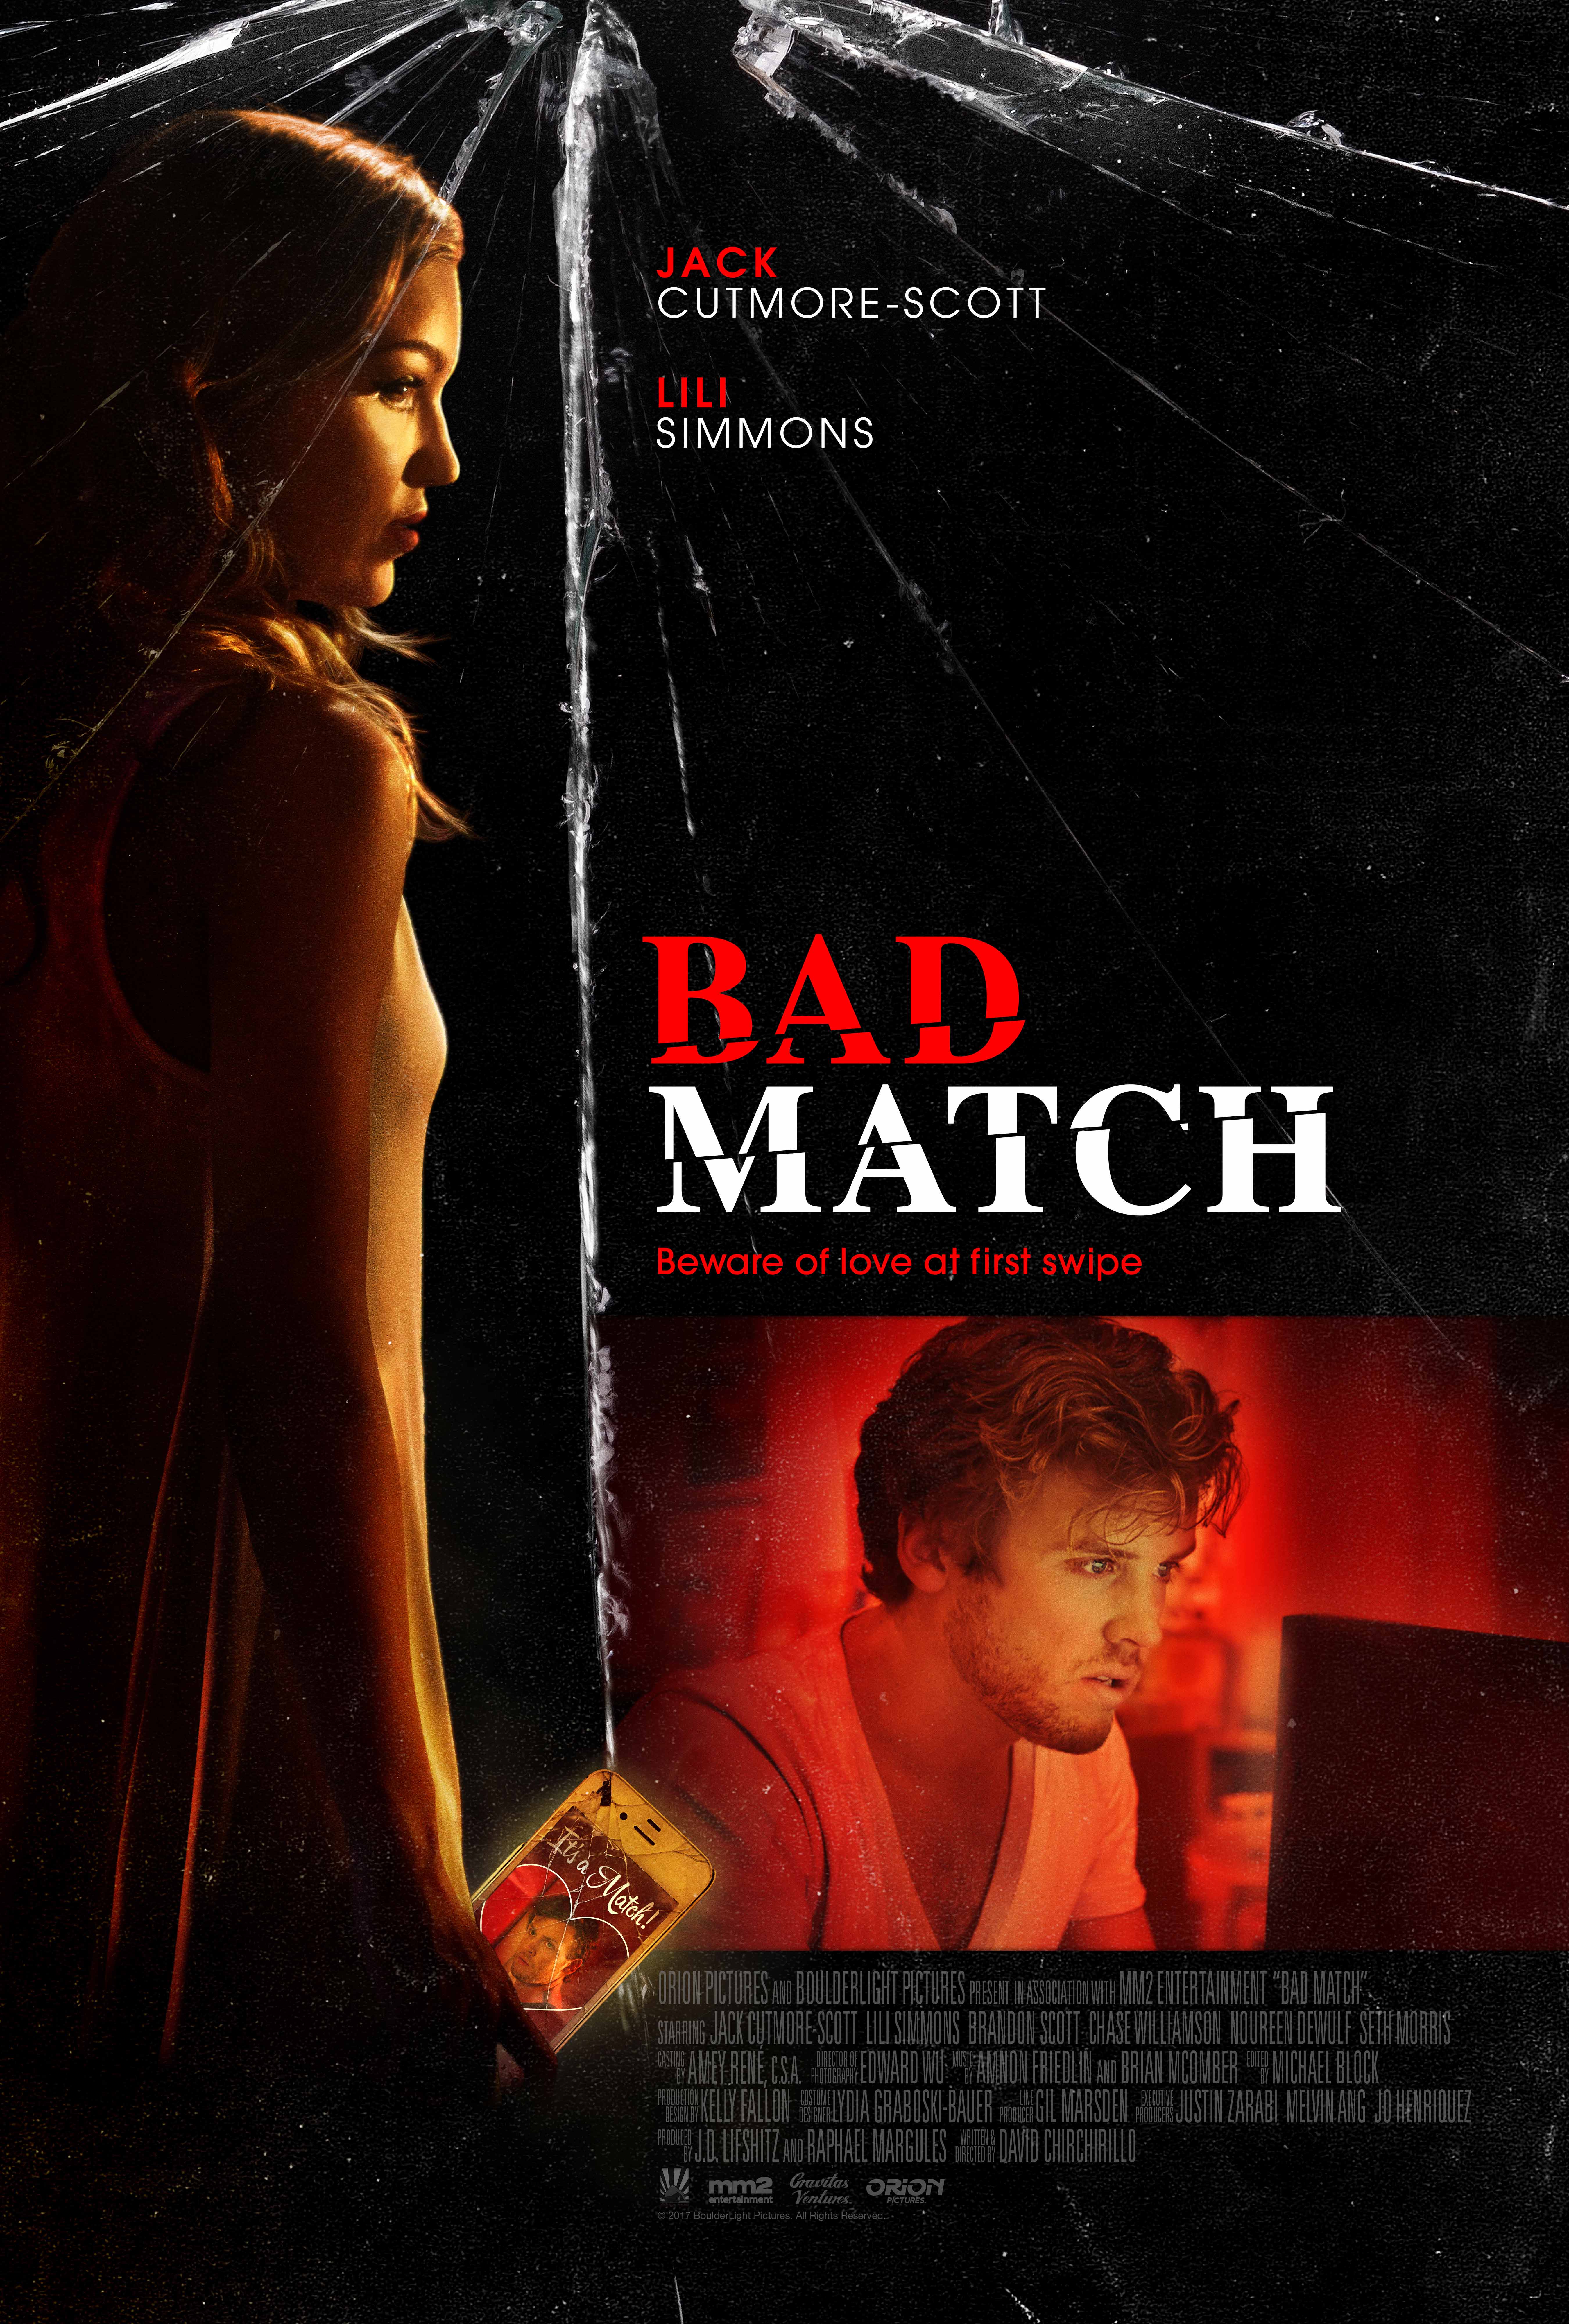 Nonton film Bad Match layarkaca21 indoxx1 ganool online streaming terbaru